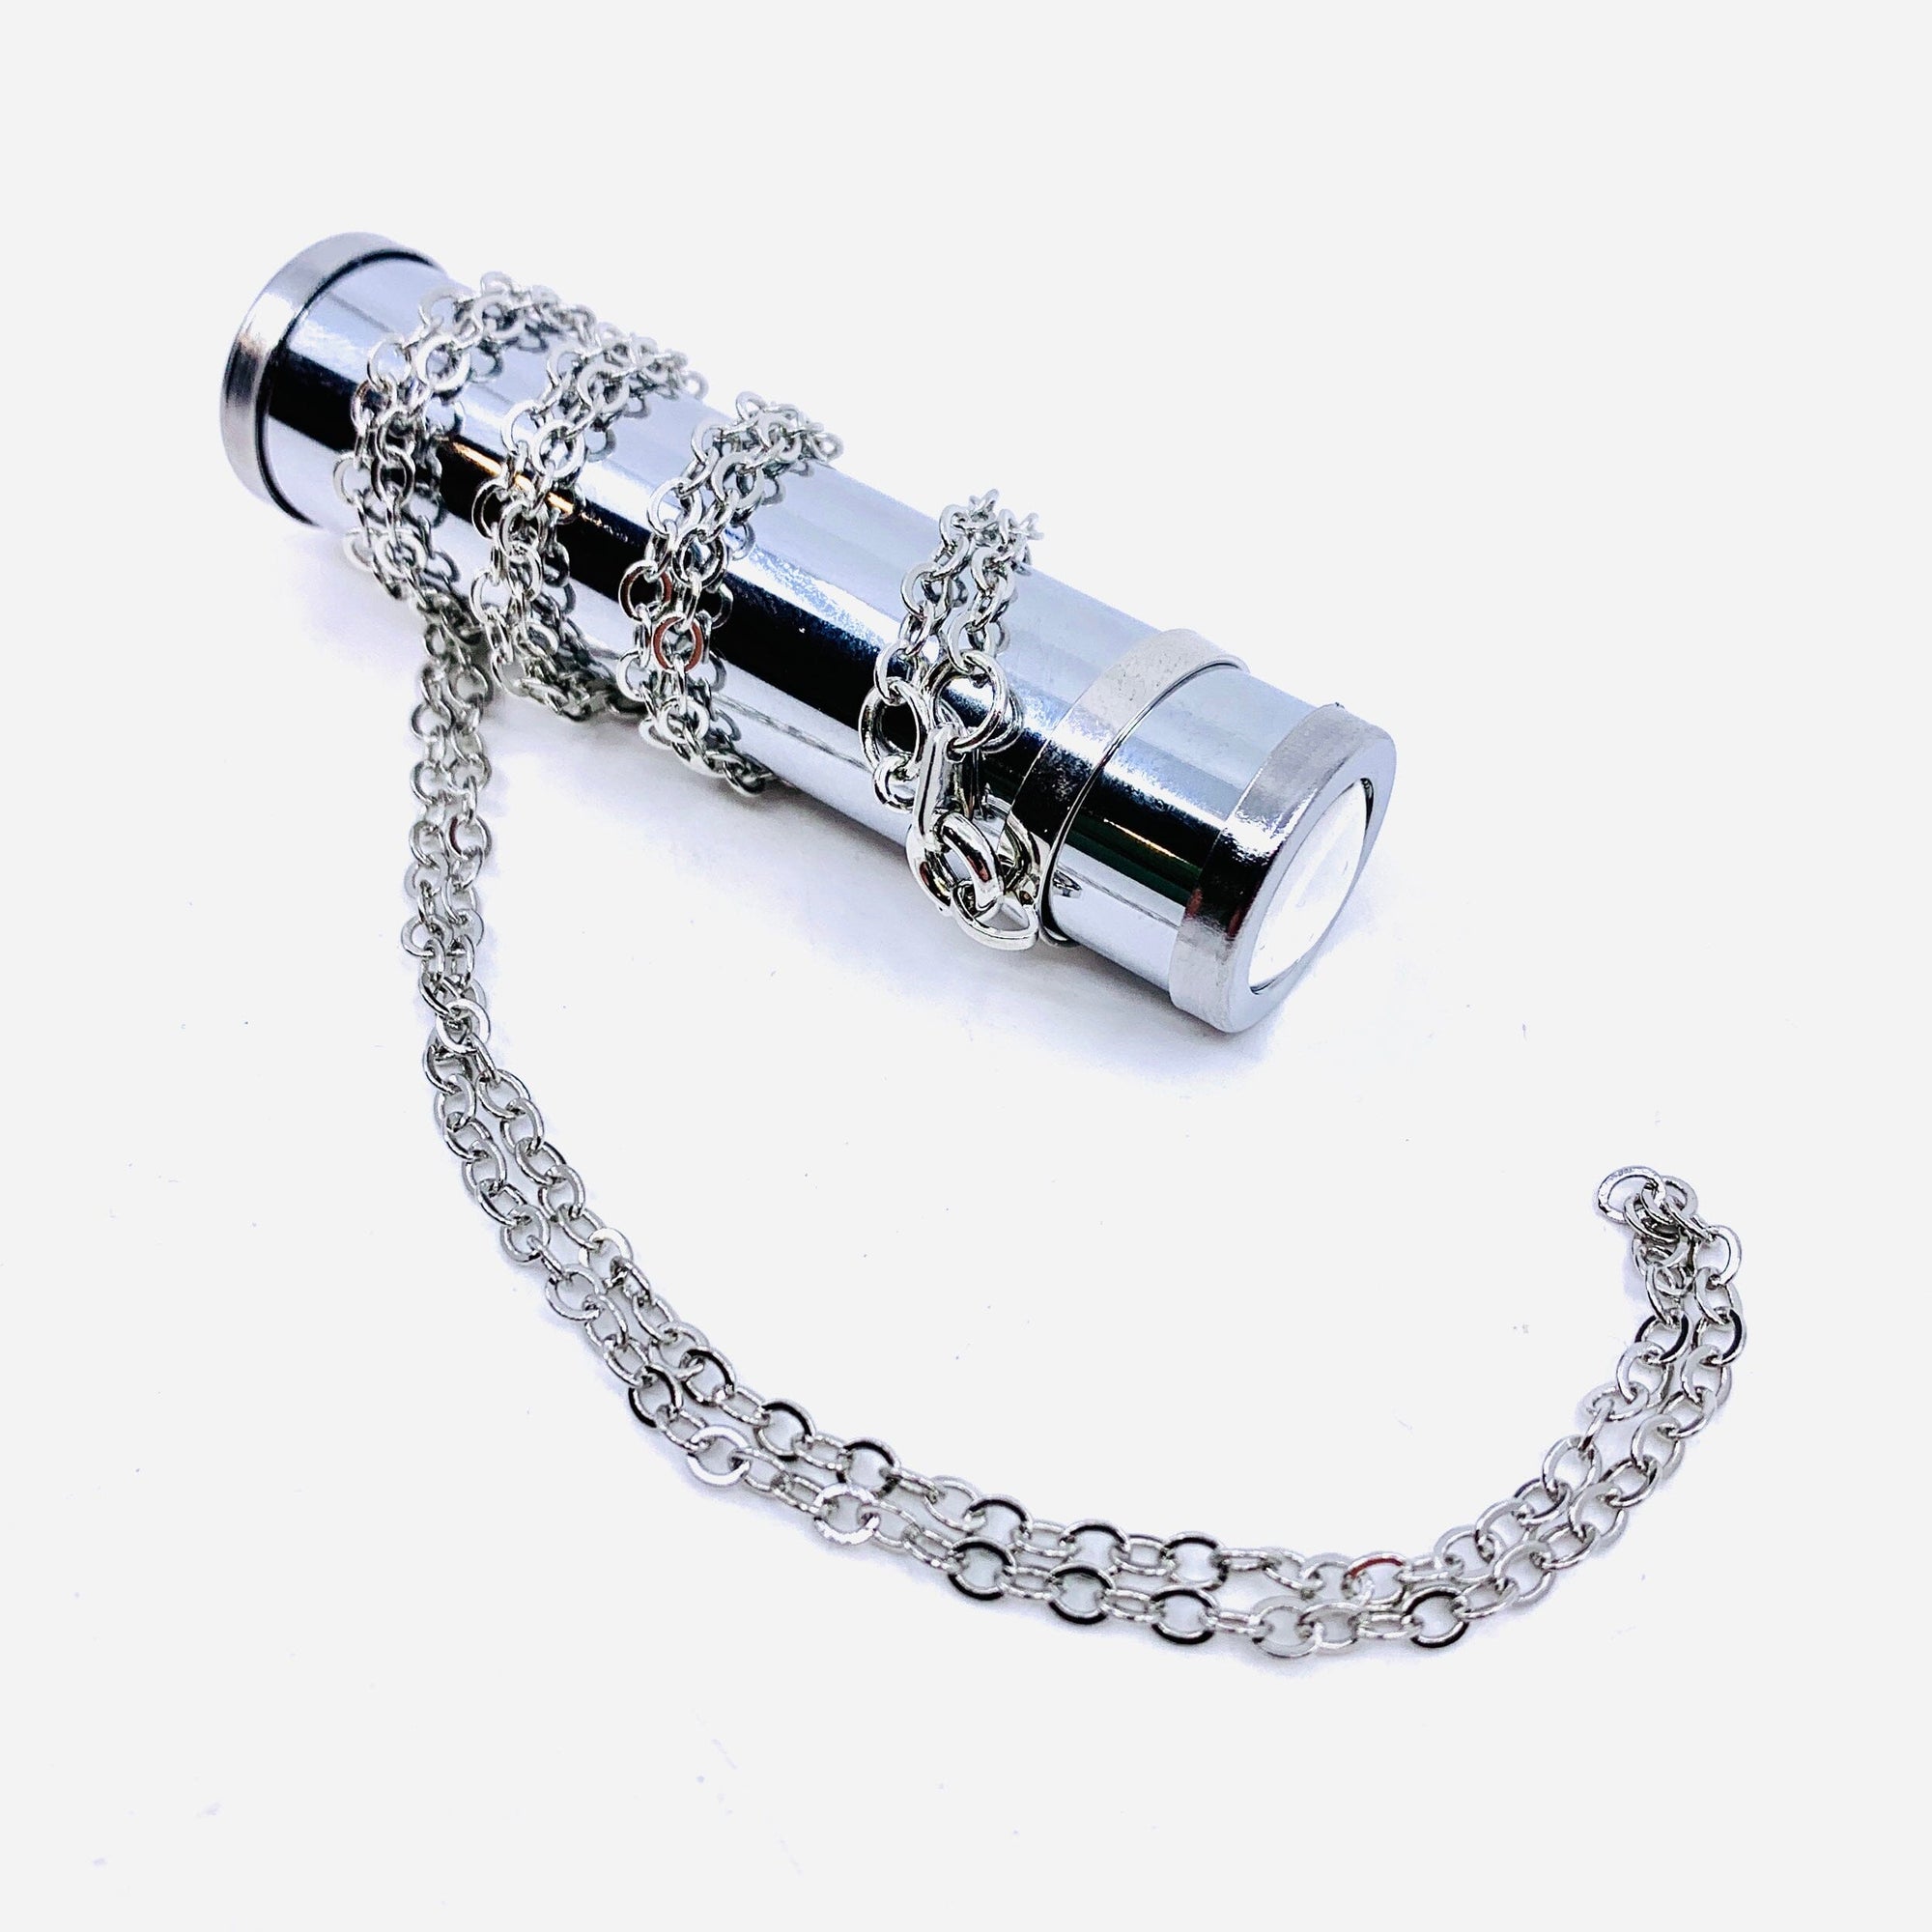 Kaleidoscope Necklace, Silver Jewelry Golden Island INT'L INC 